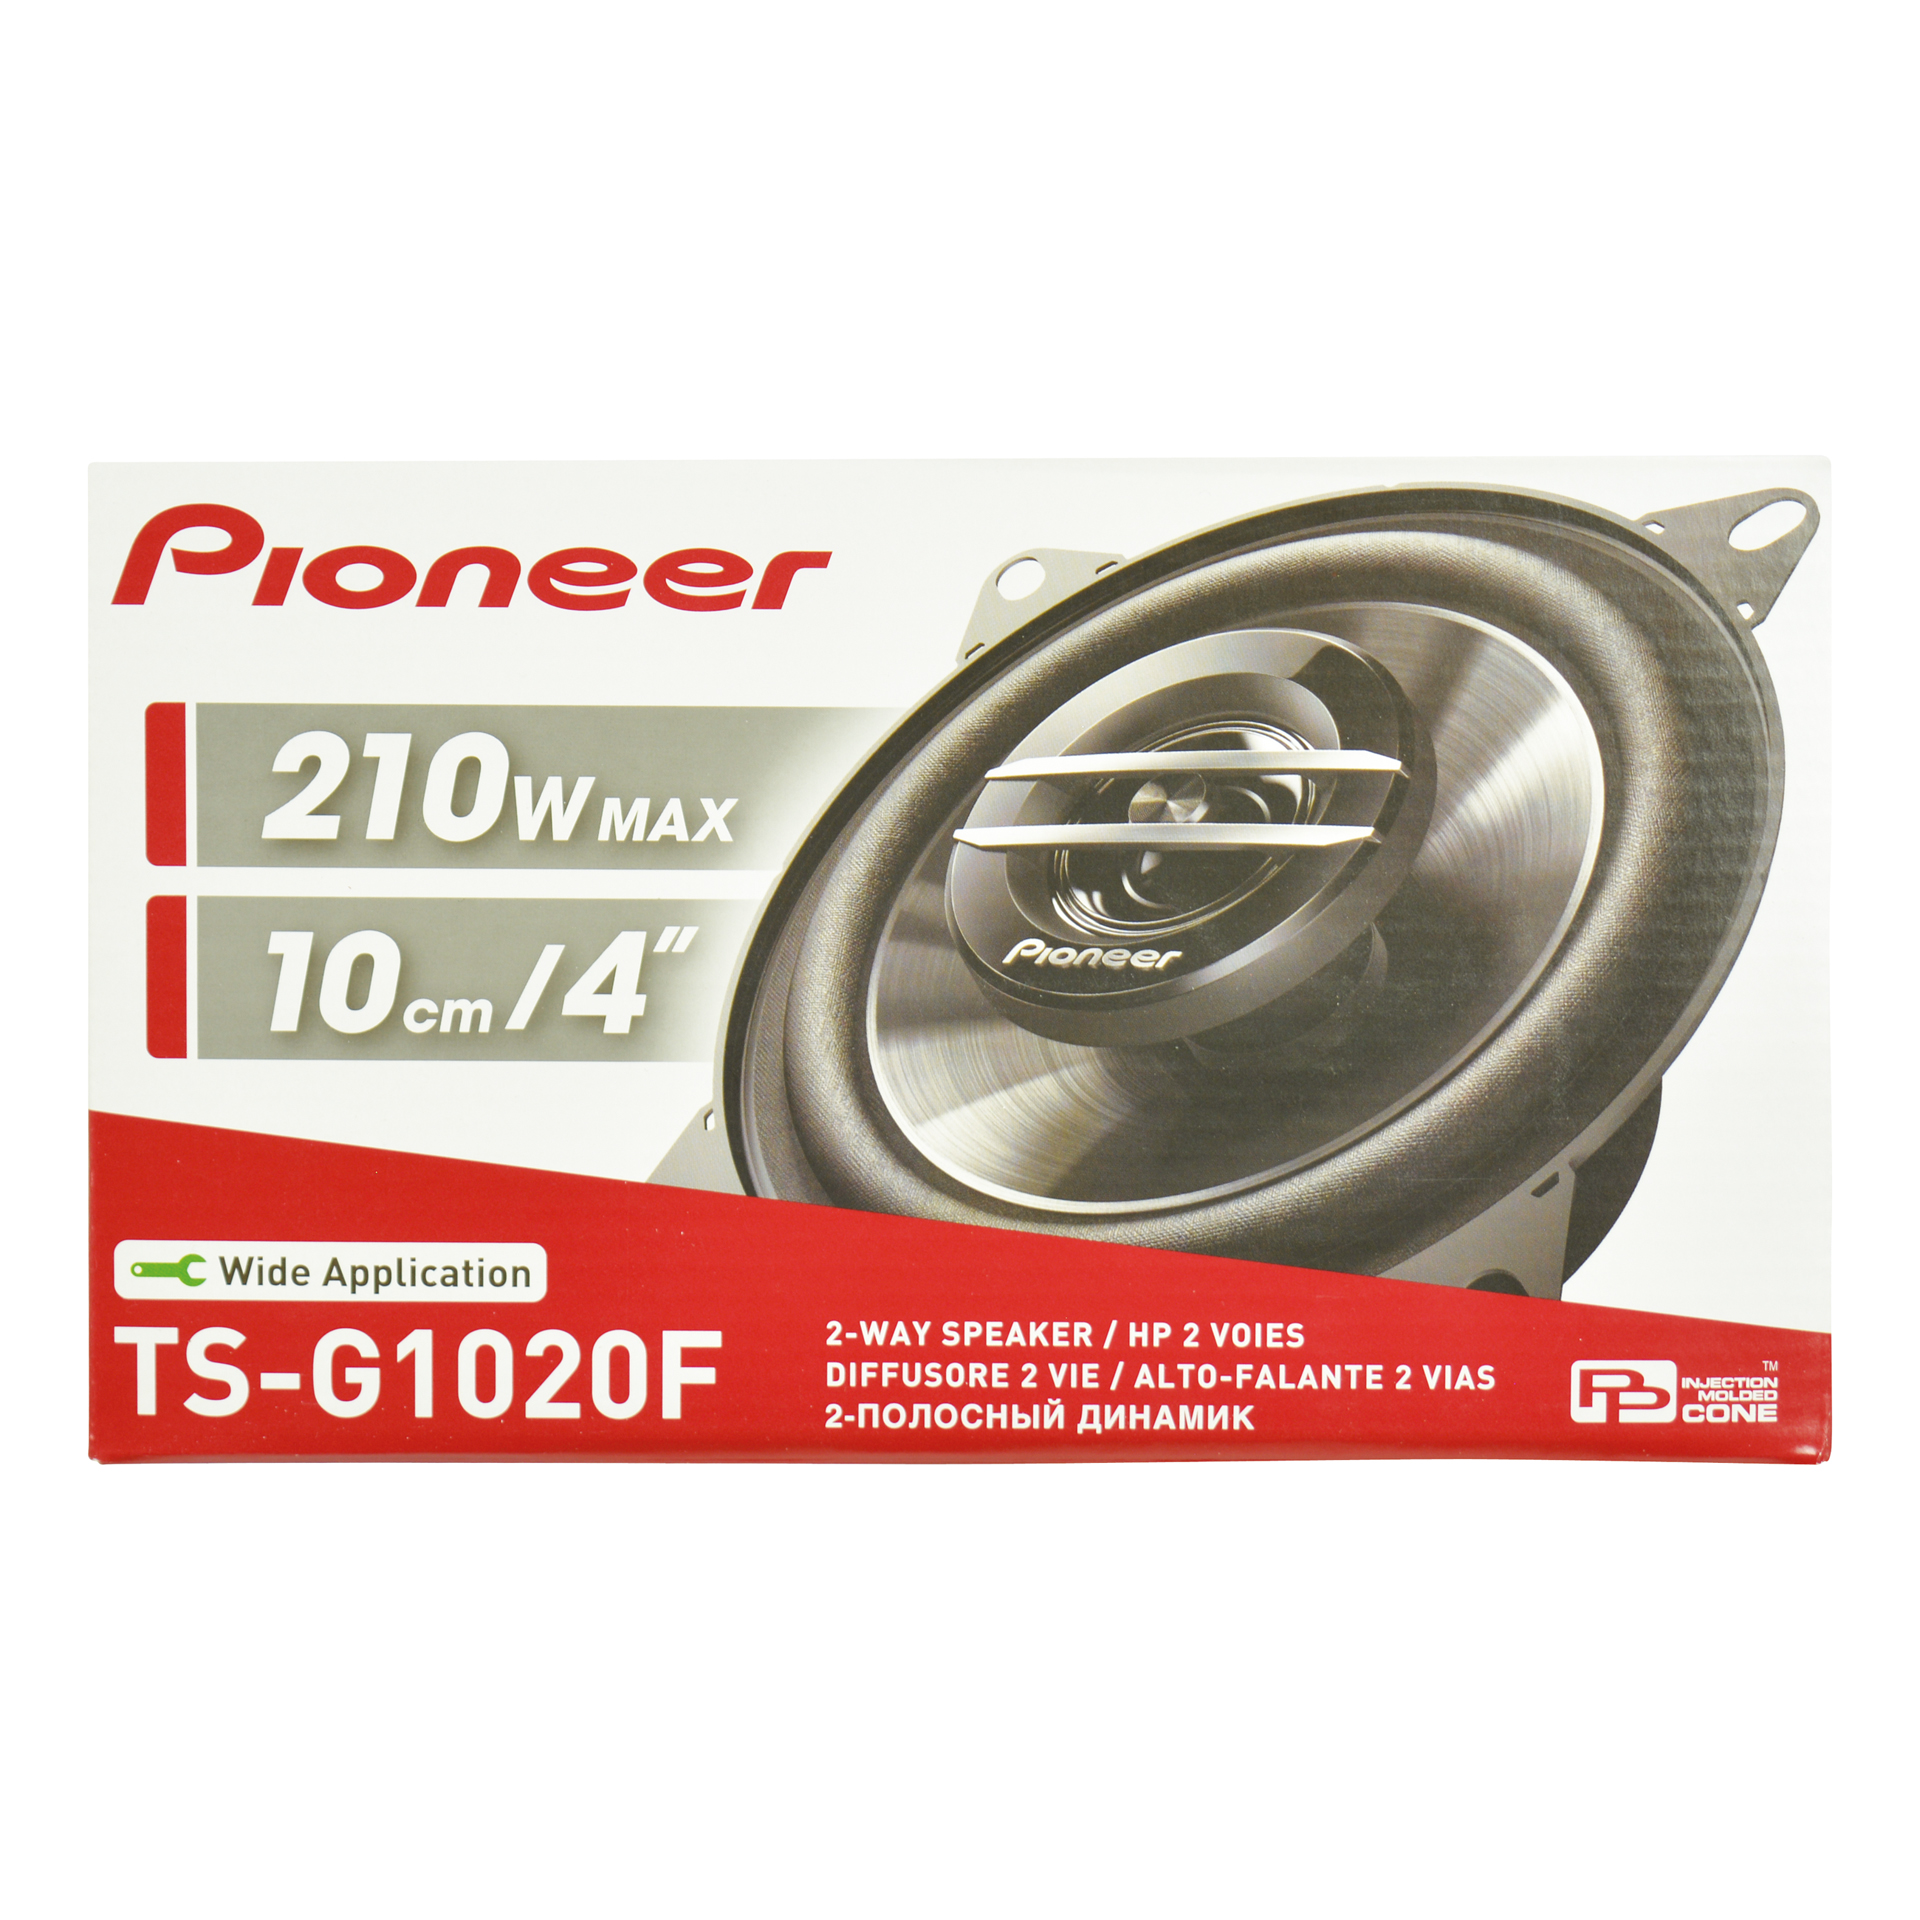 Pioneer TS-G1020F Speakerset 210W 10cm (0810514)